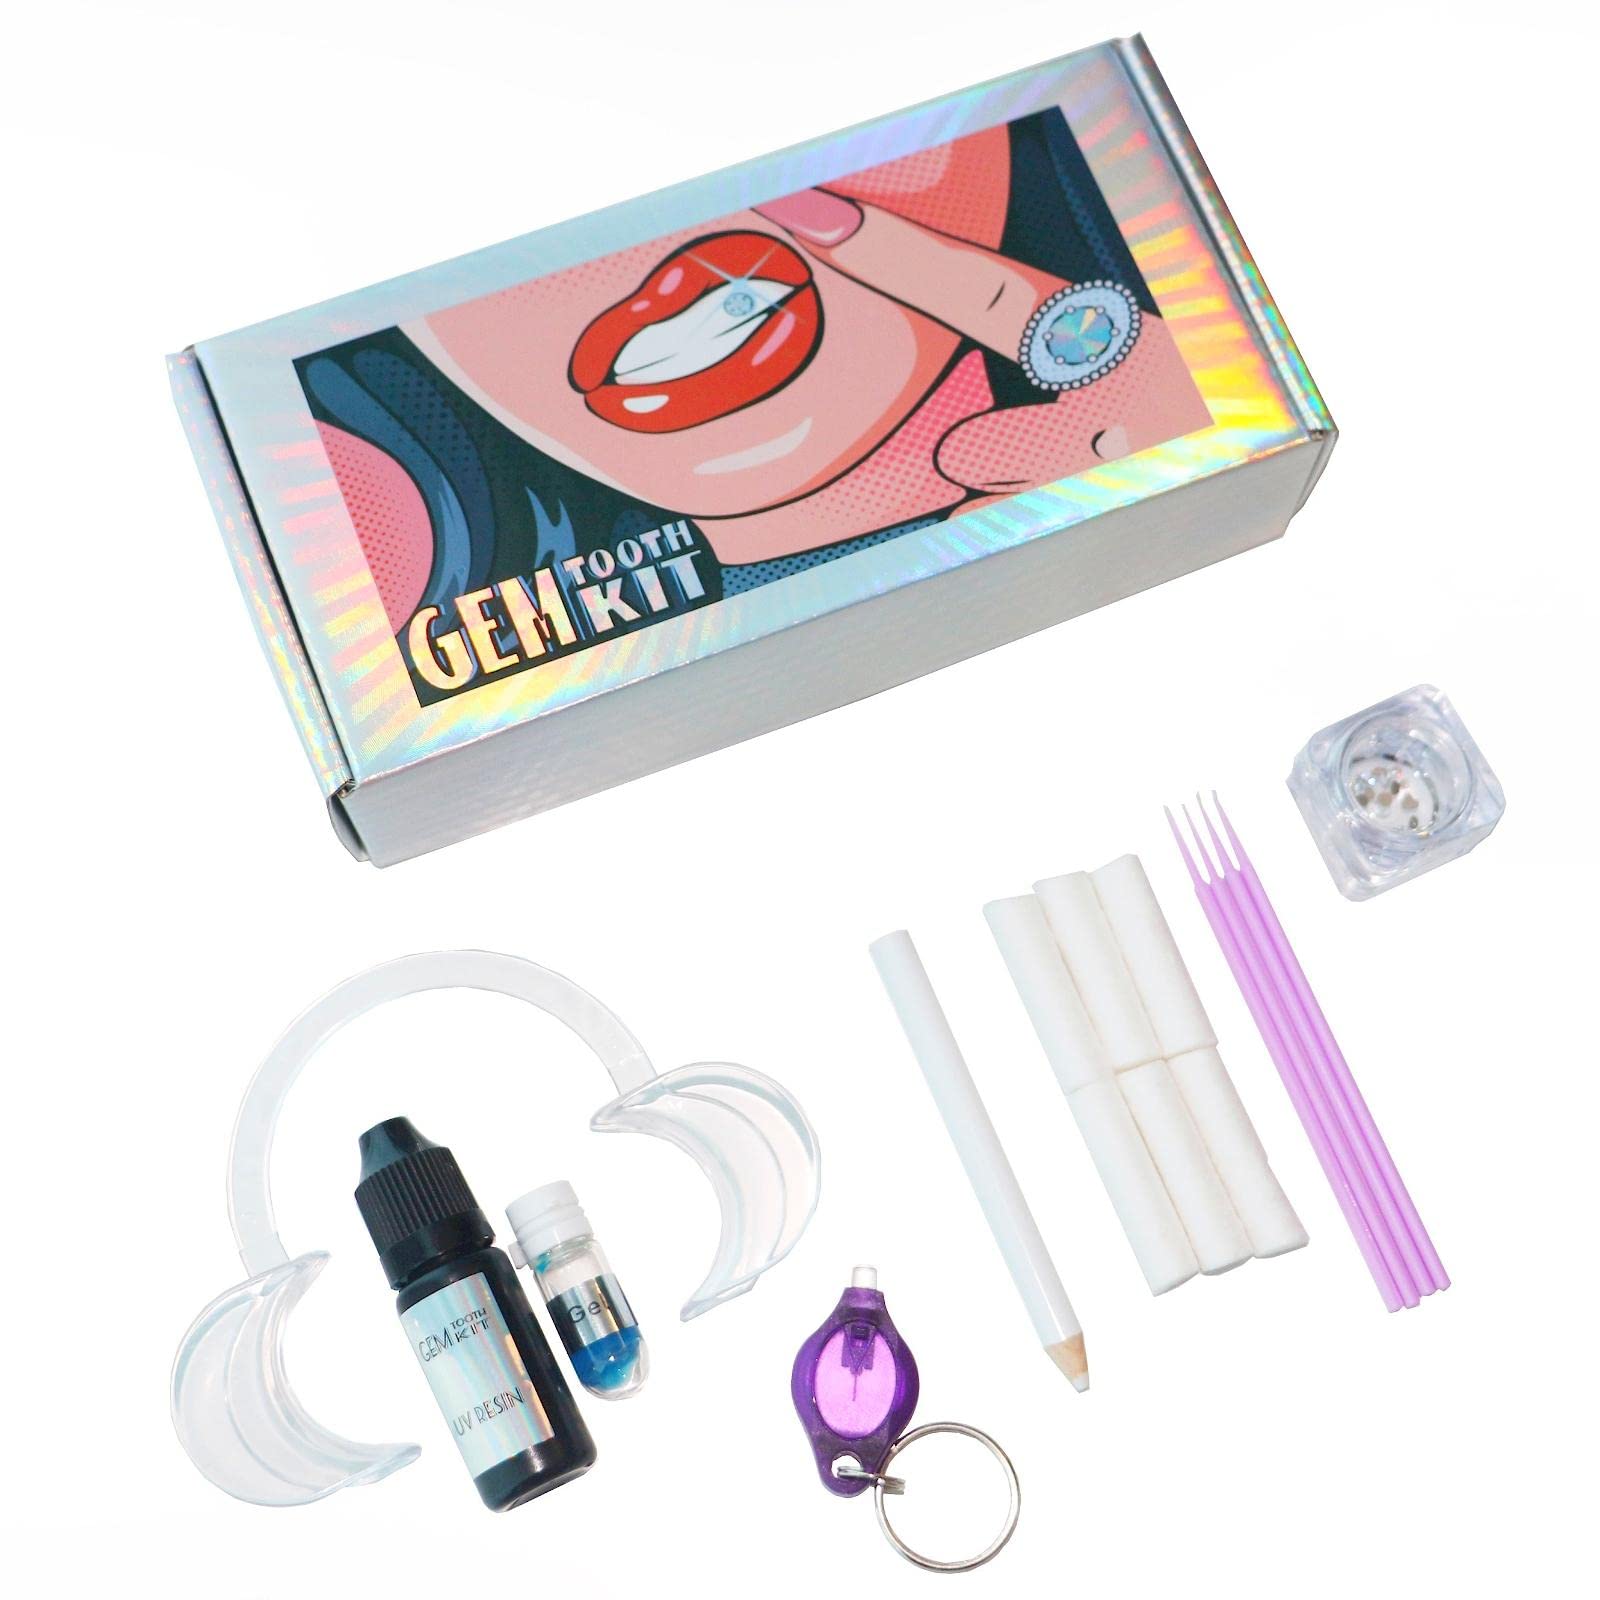 Professional DIY Tooth Gem Kit, Tooth Gem Starter Qatar